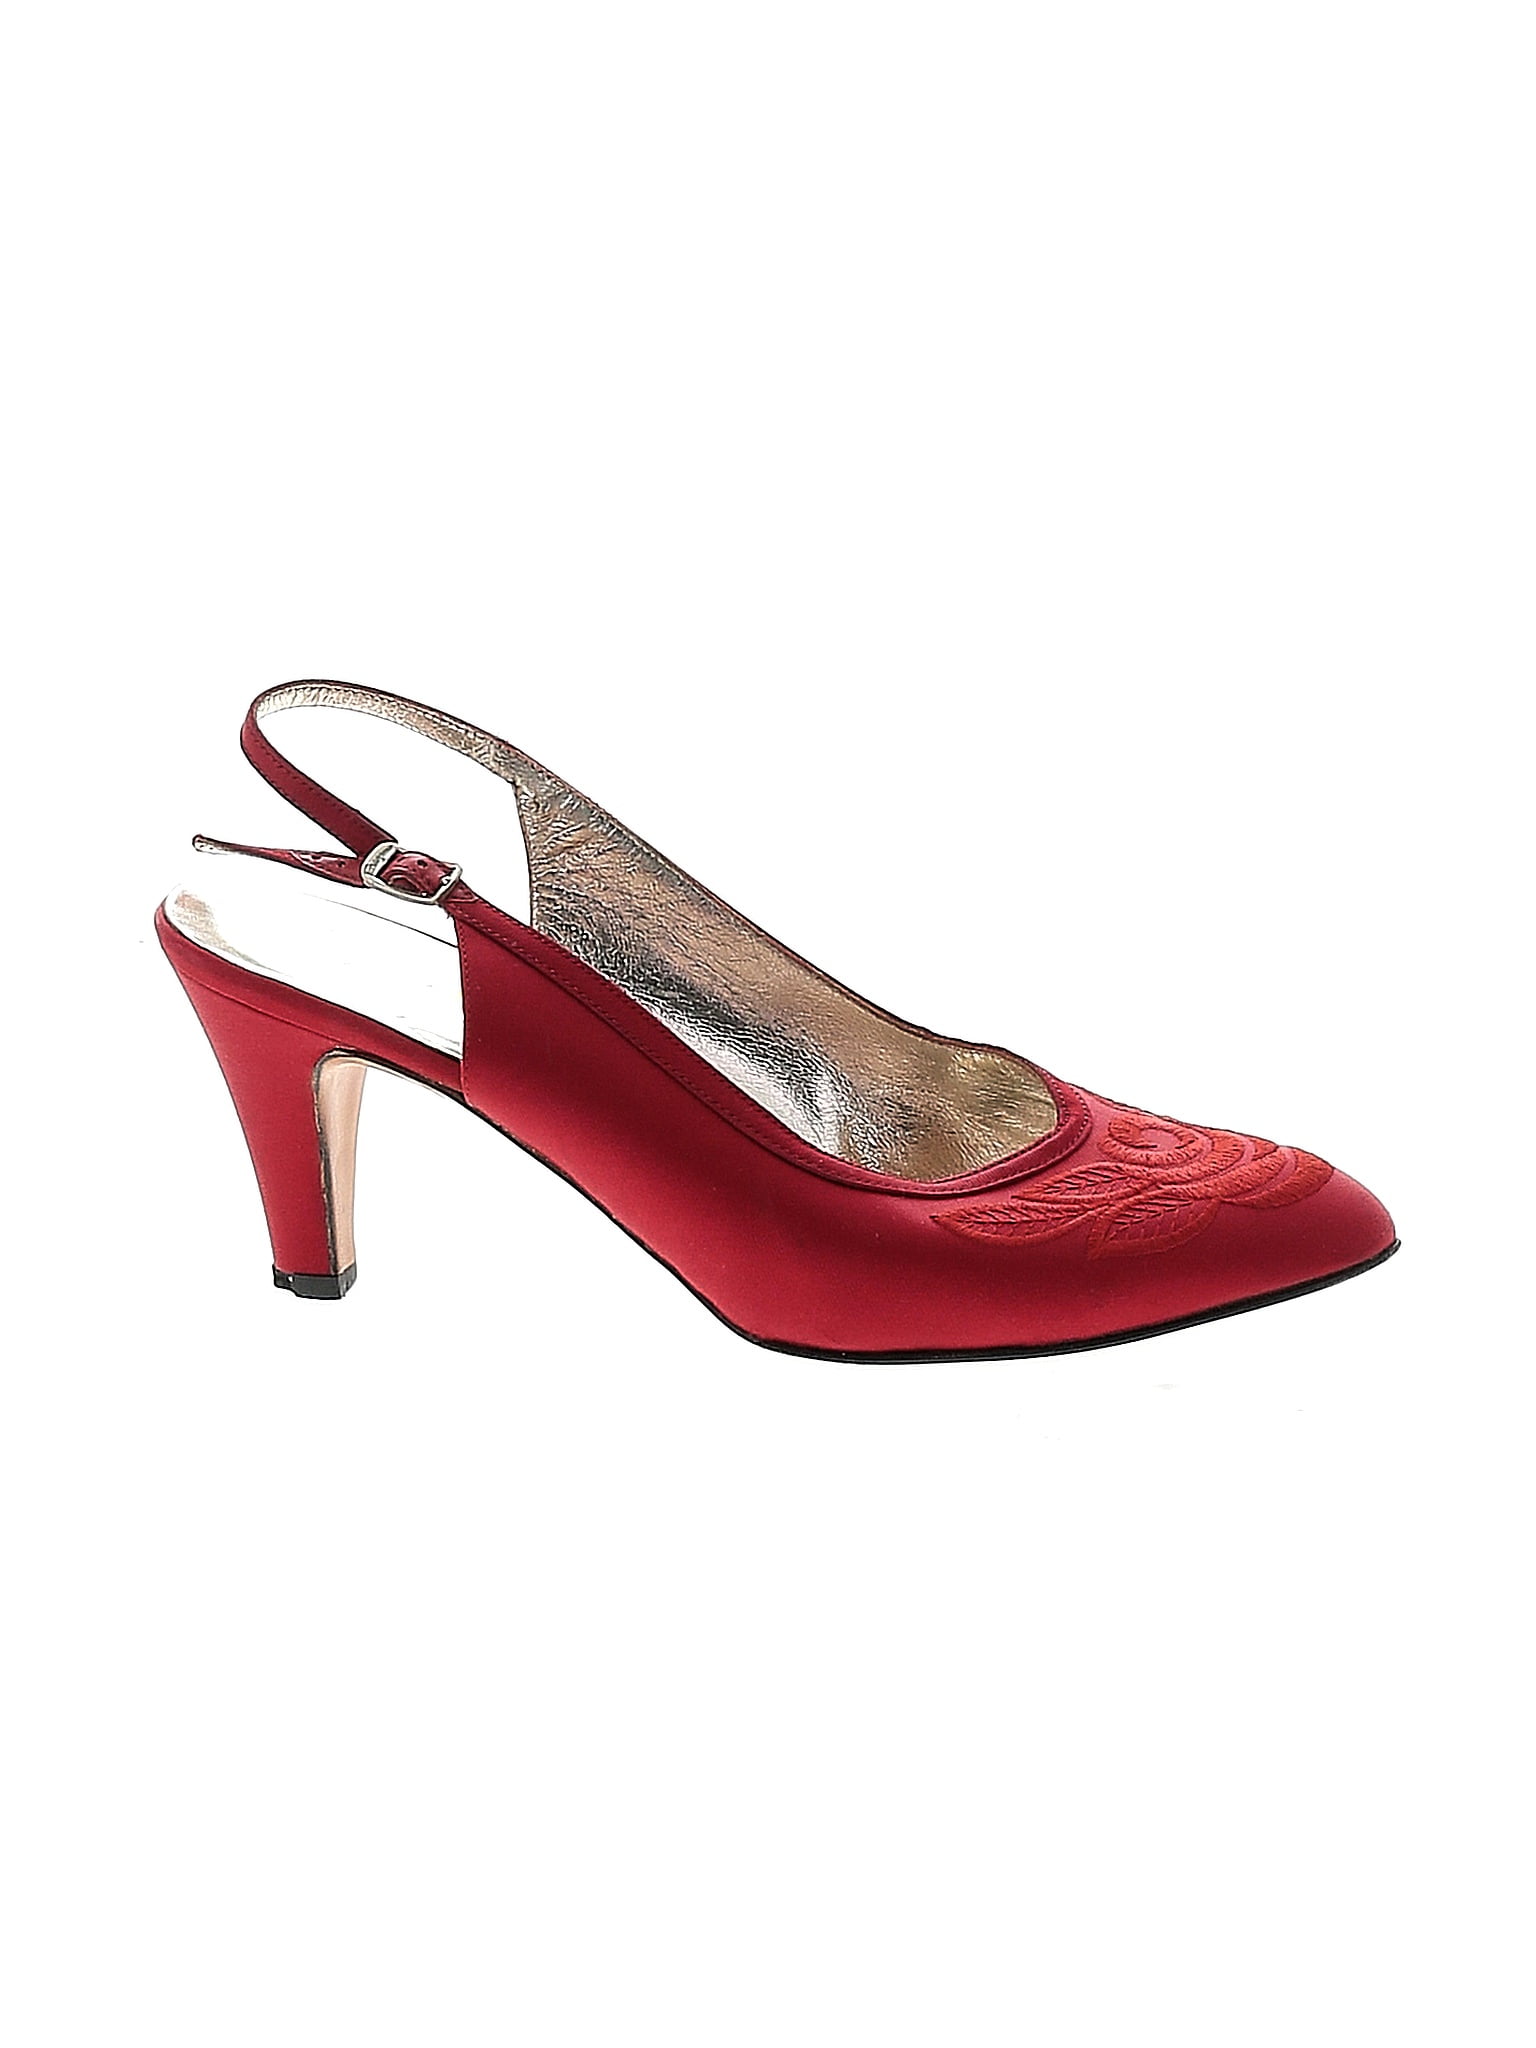 Salvatore Ferragamo Color Block Red Heels Size 5 1/2 - 82% off 